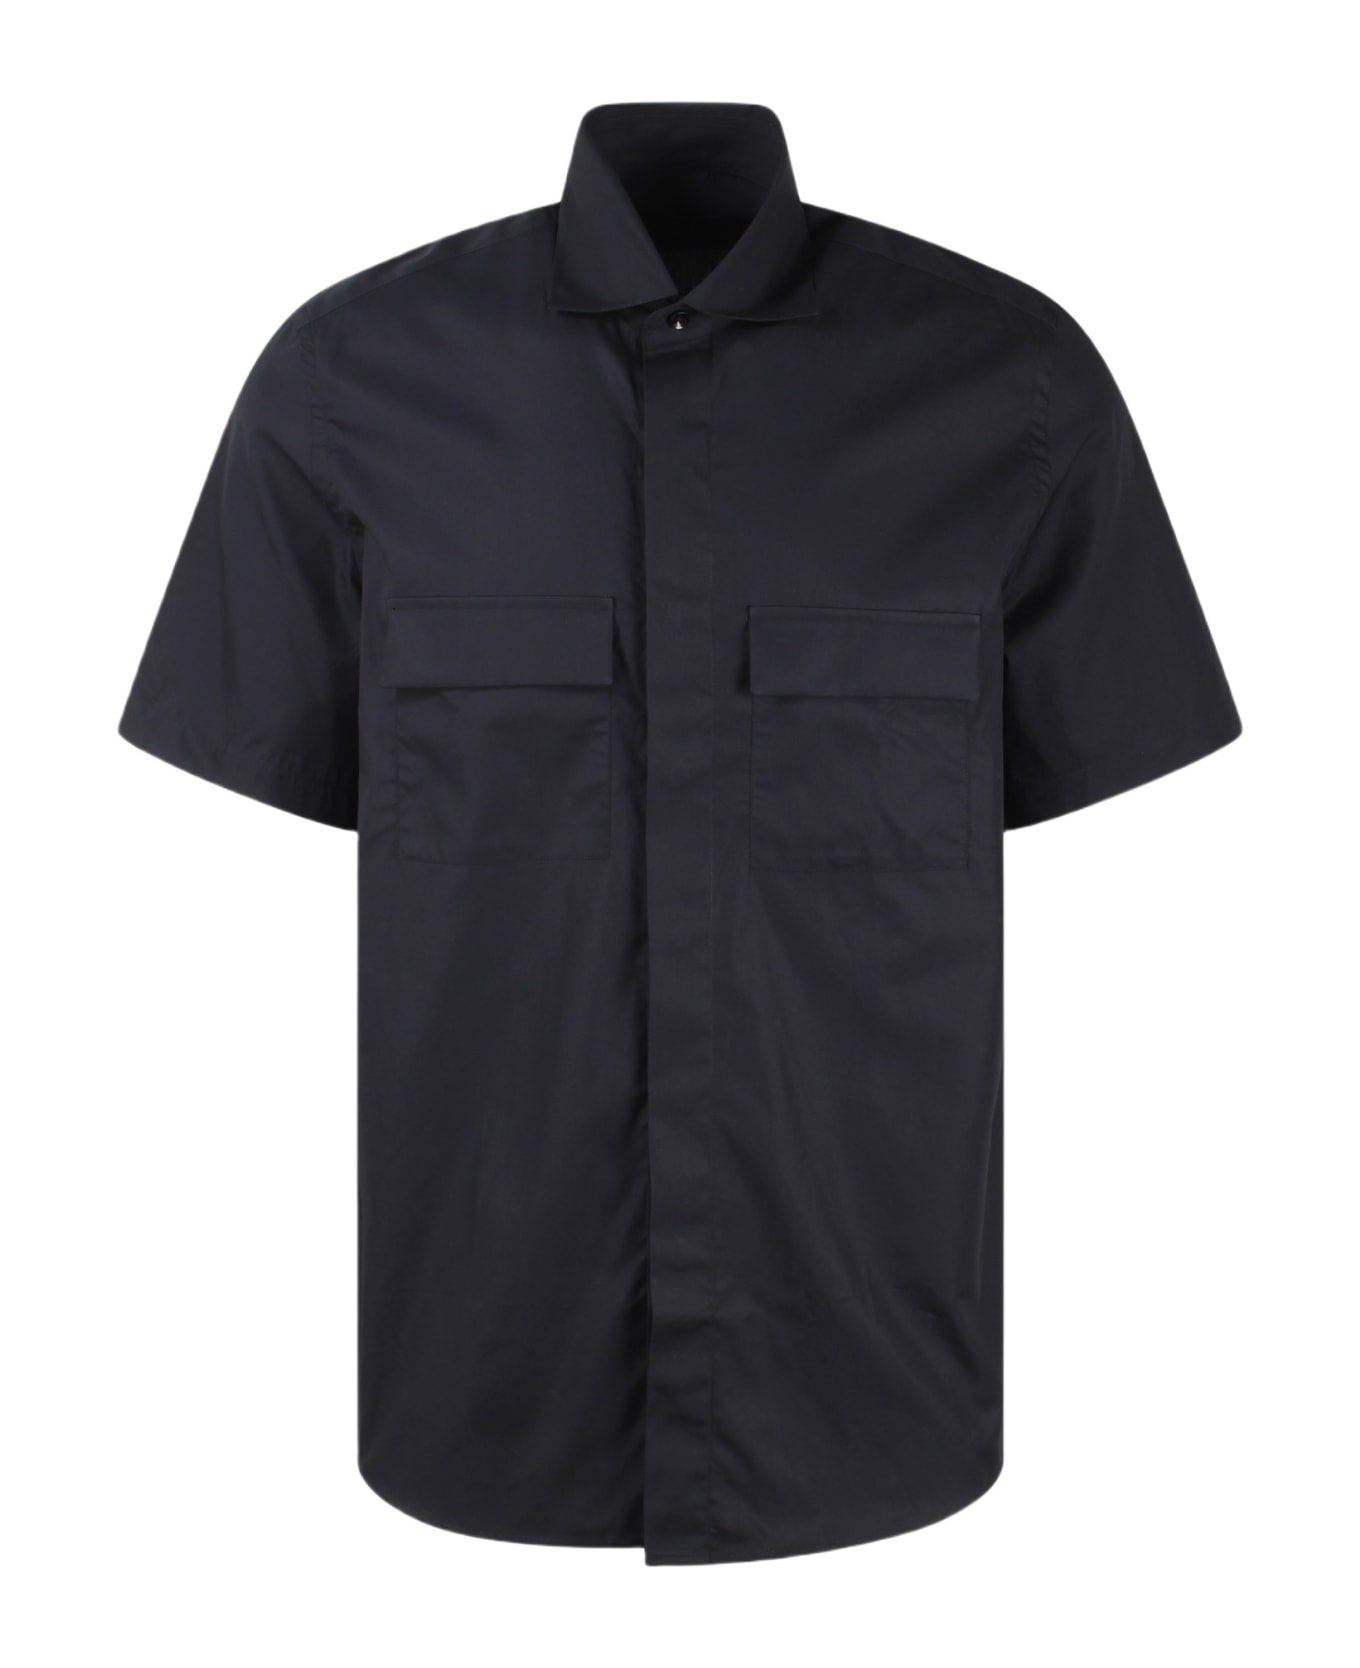 Low Brand Double Pocket Cotton Poplin Shirt - Black